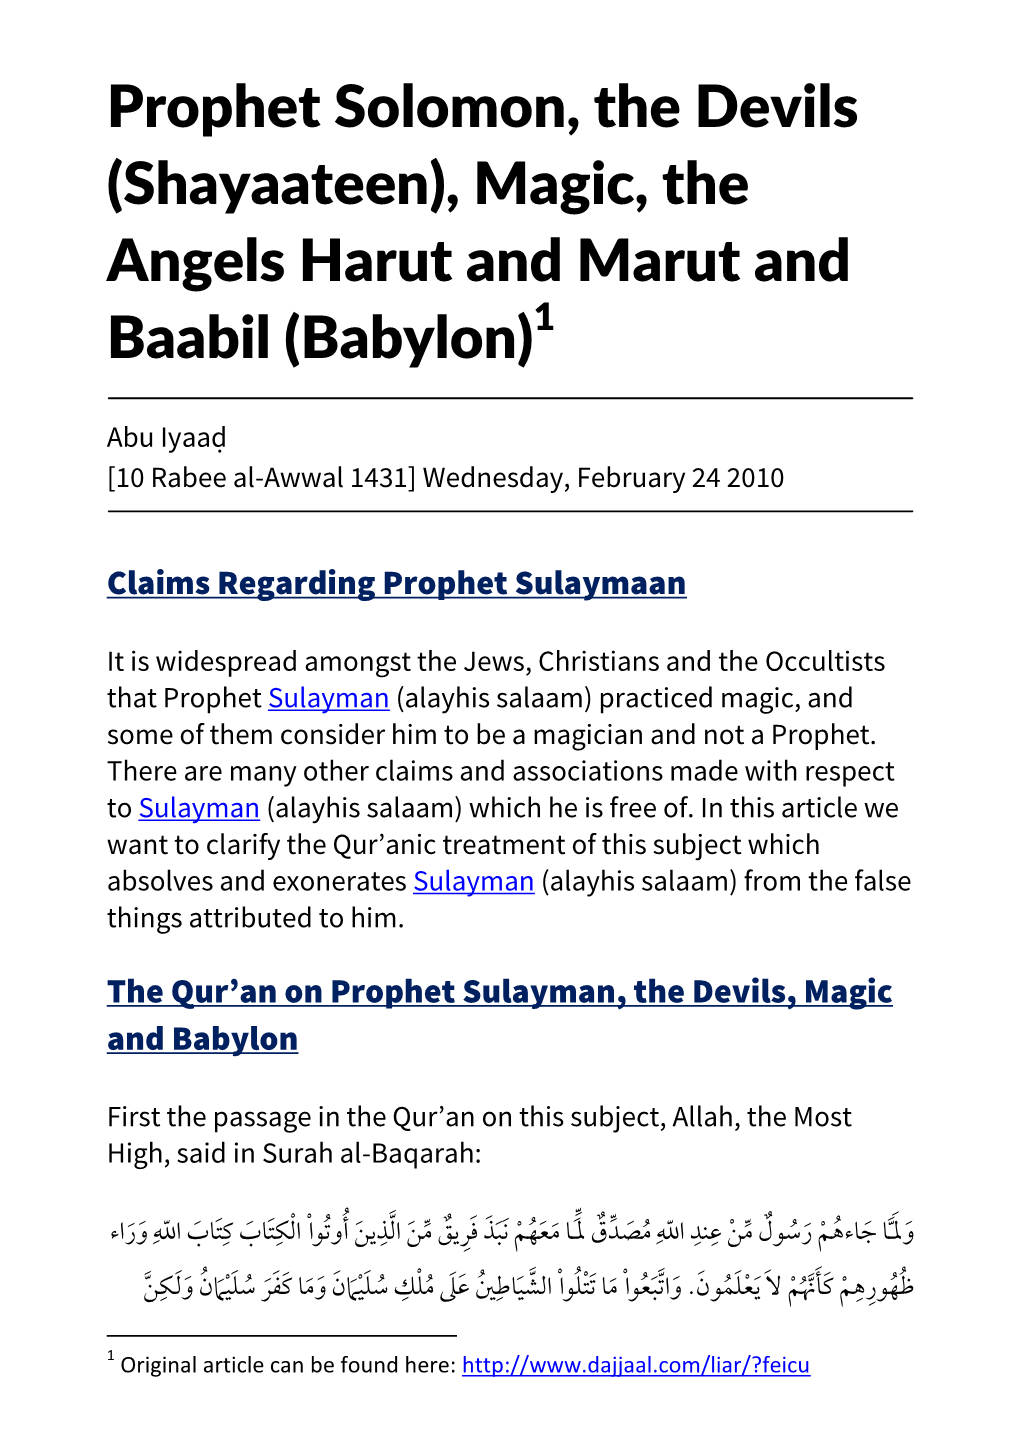 Magic, the Angels Harut and Marut and Baabil (Babylon)1